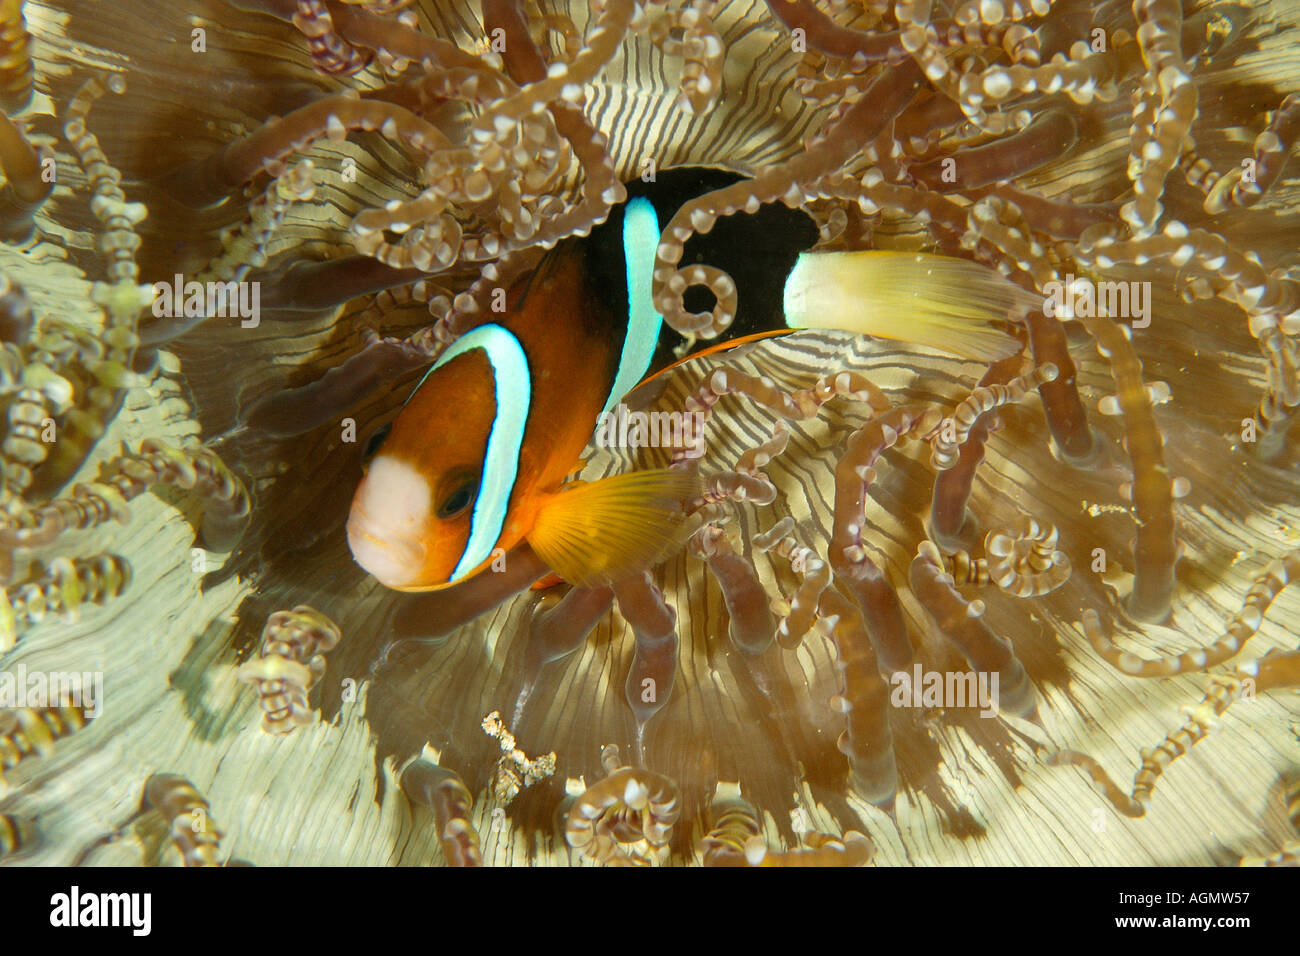 Clark s anemonefish Amphiprion clarkii in beaded sea anemone Heteractis aurora Puerto Galera Mindoro Philippines Stock Photo